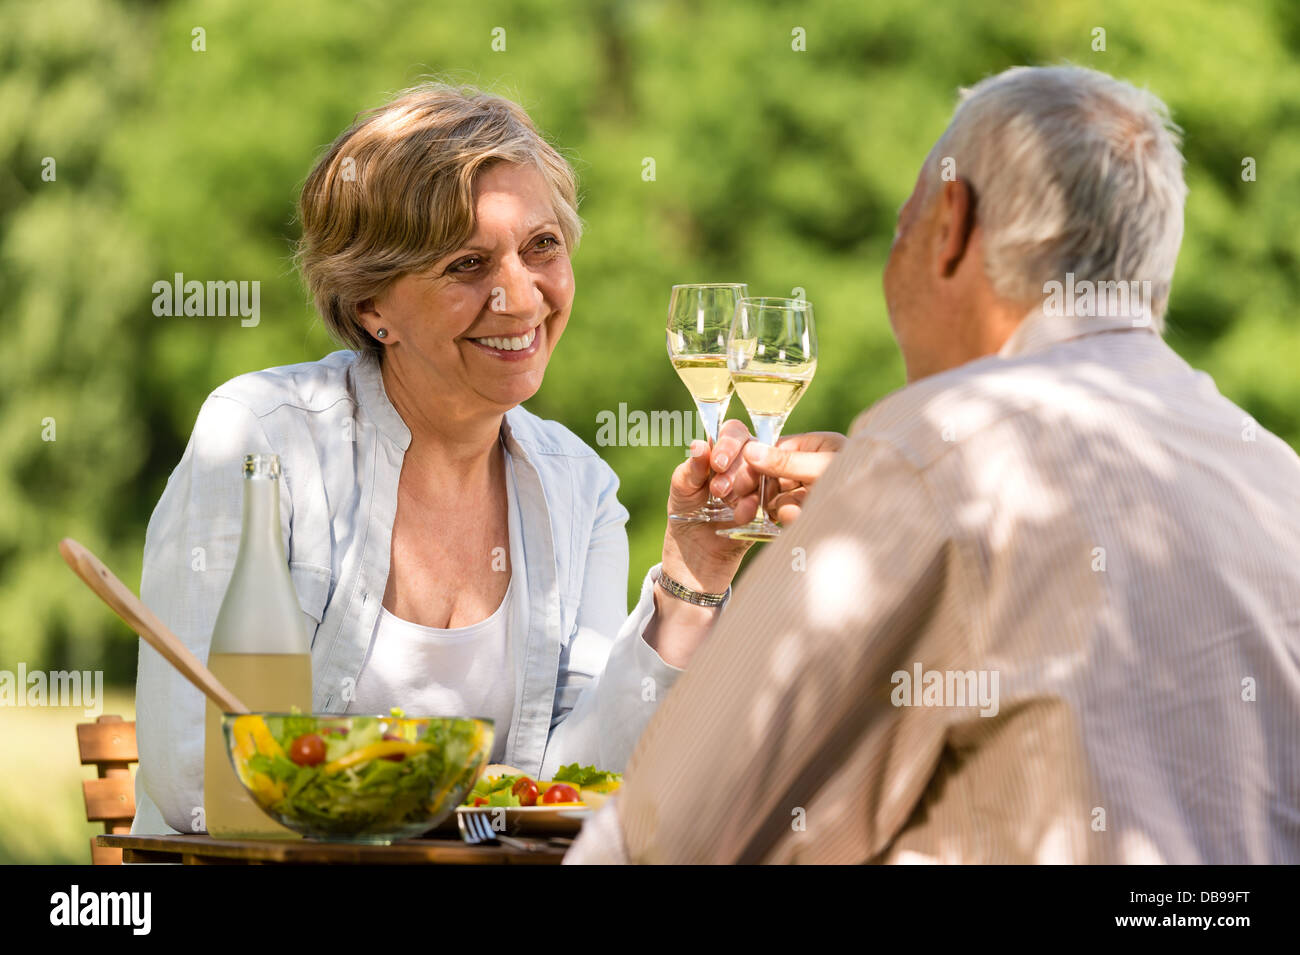 Happy senior citizens clinking glasses in garden Stock Photo